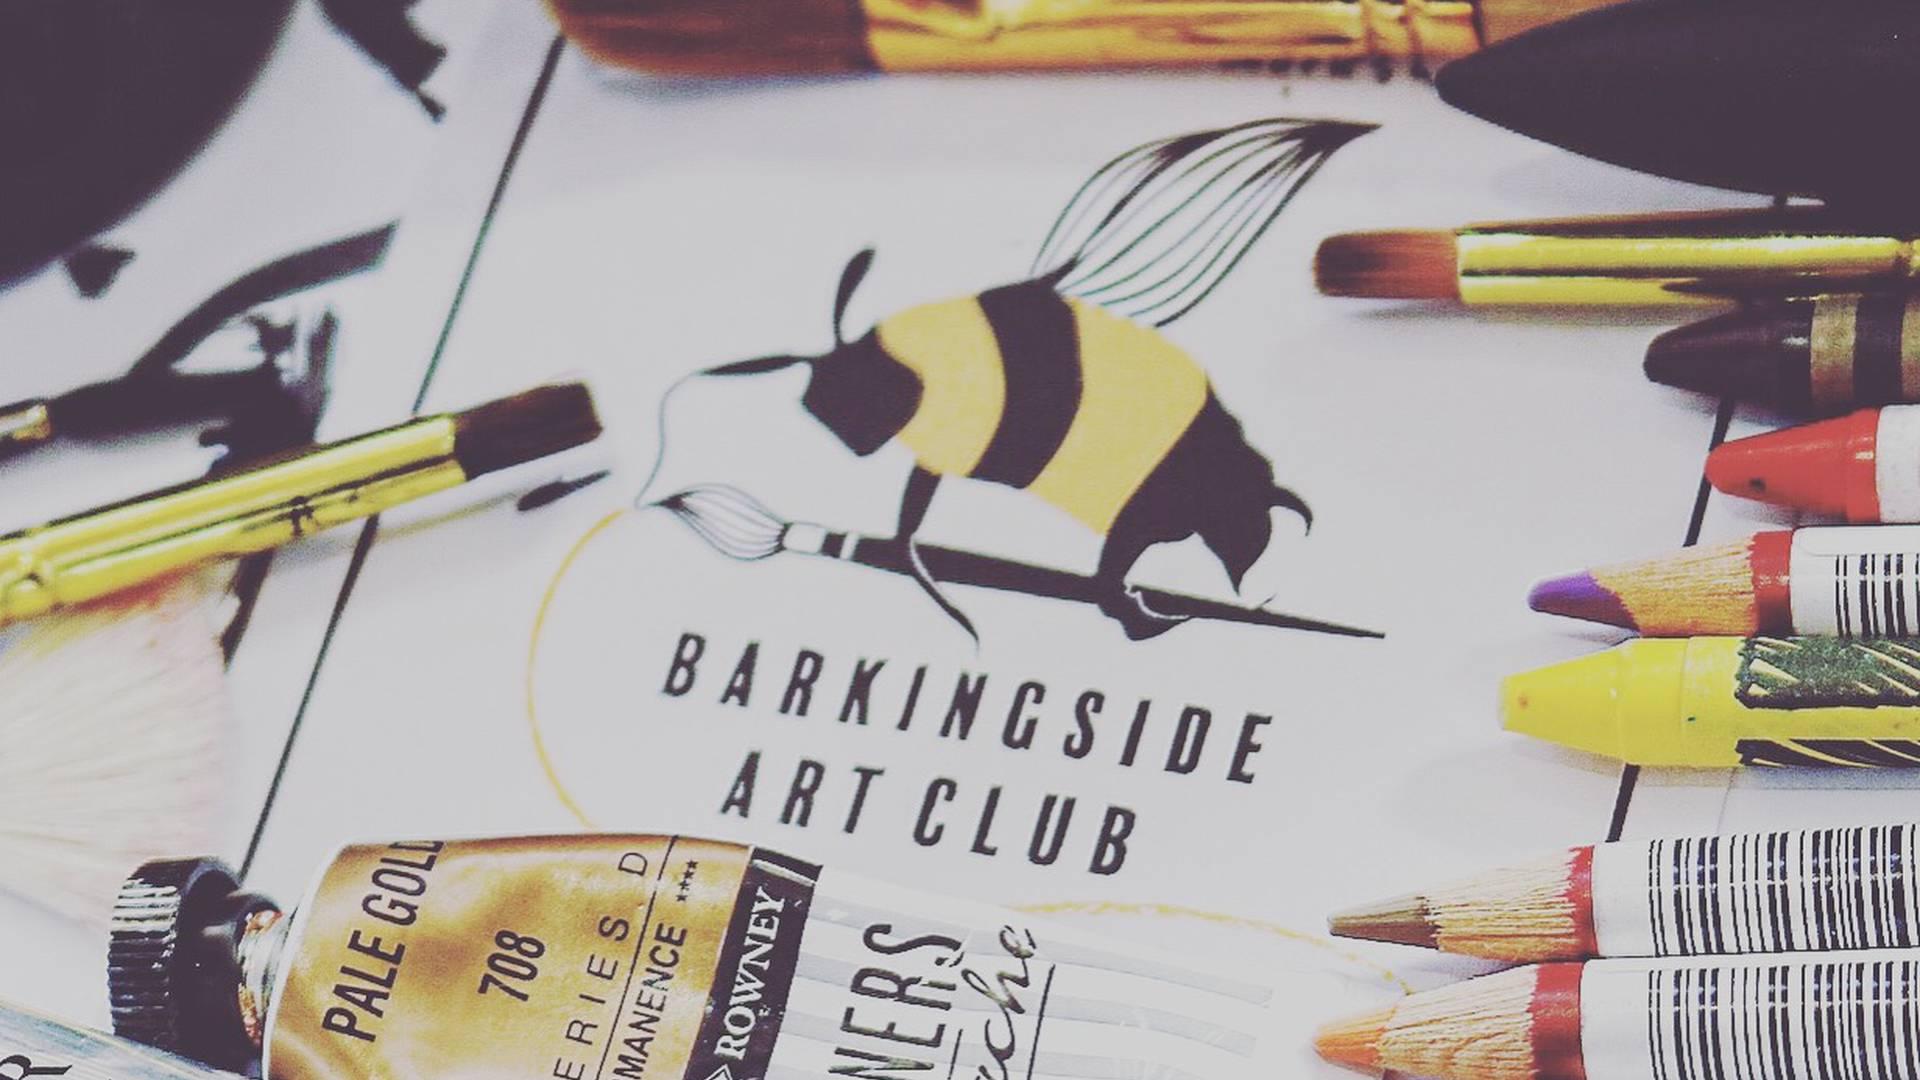 Barkingside Art Club photo